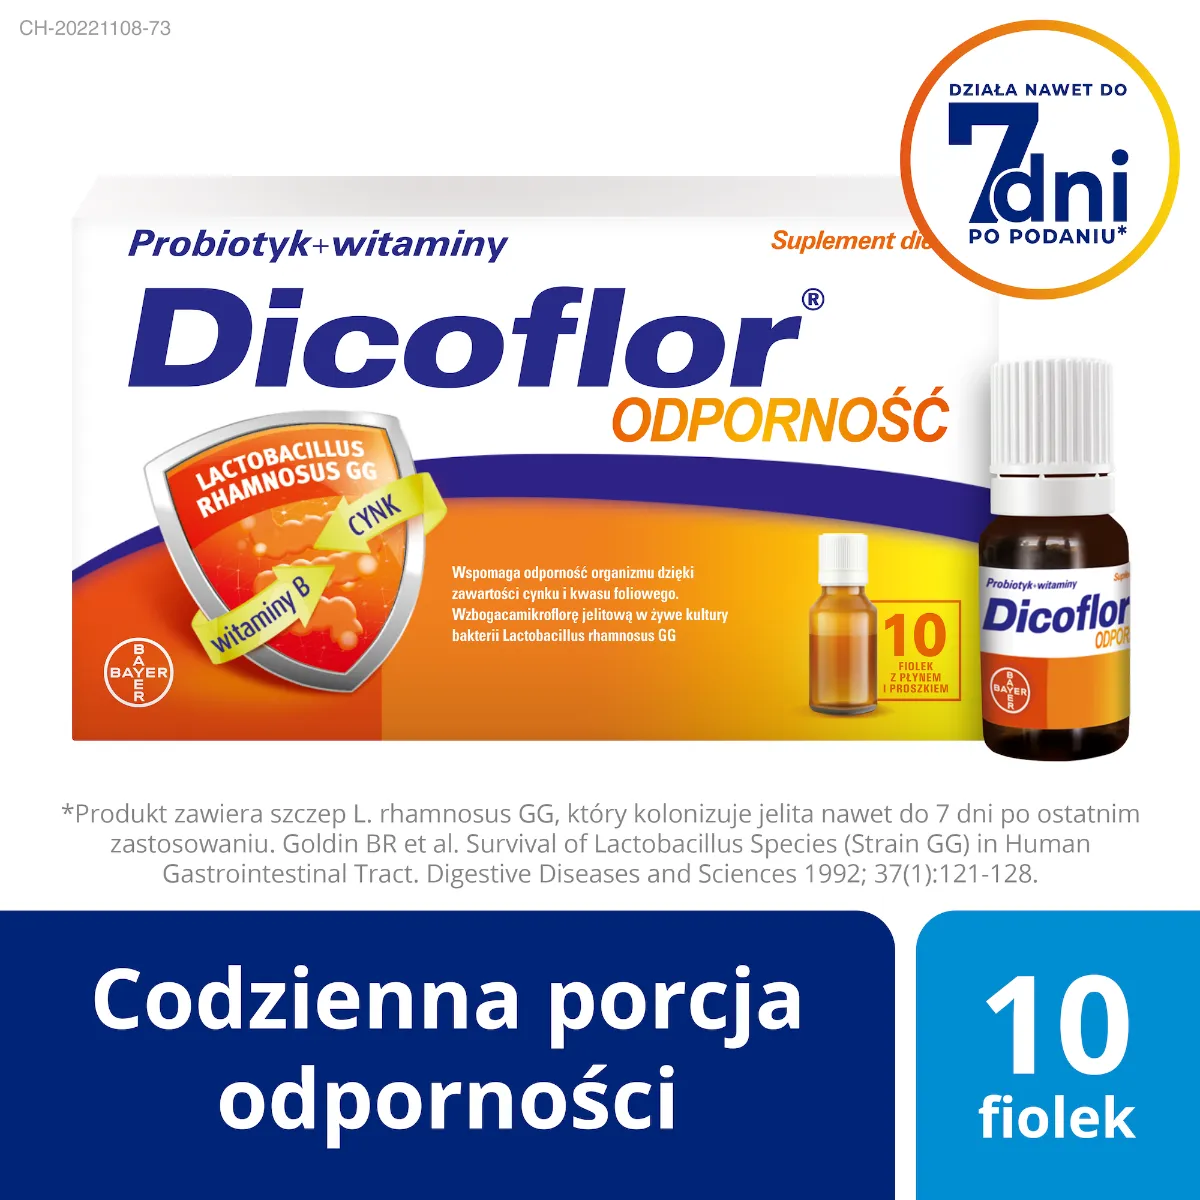 Dicoflor Odporność, suplement diety, 10 fiolek